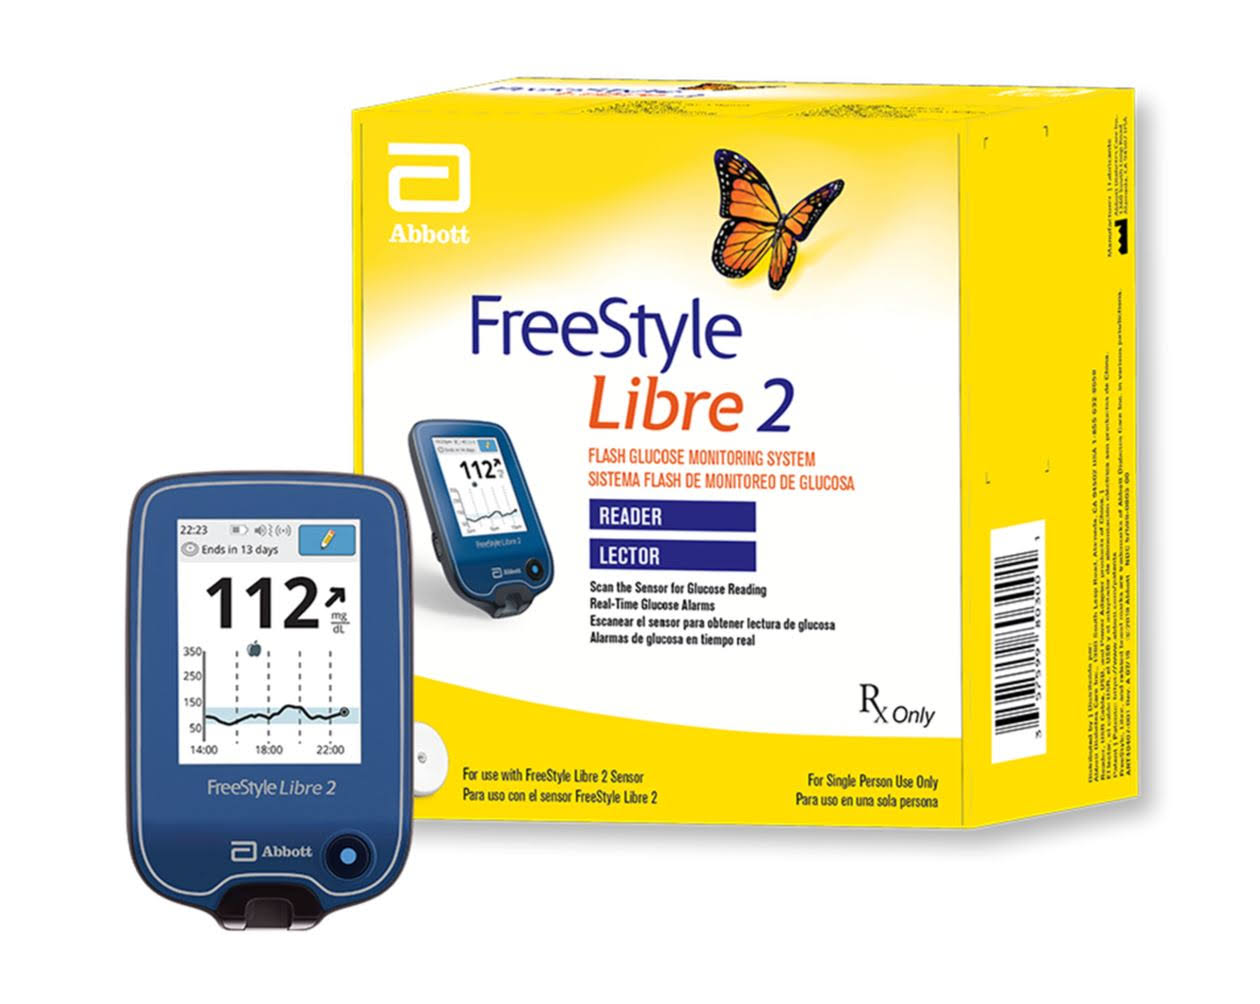 Freestyle Libre 2 System Reader Kit (hcpcs K0554)